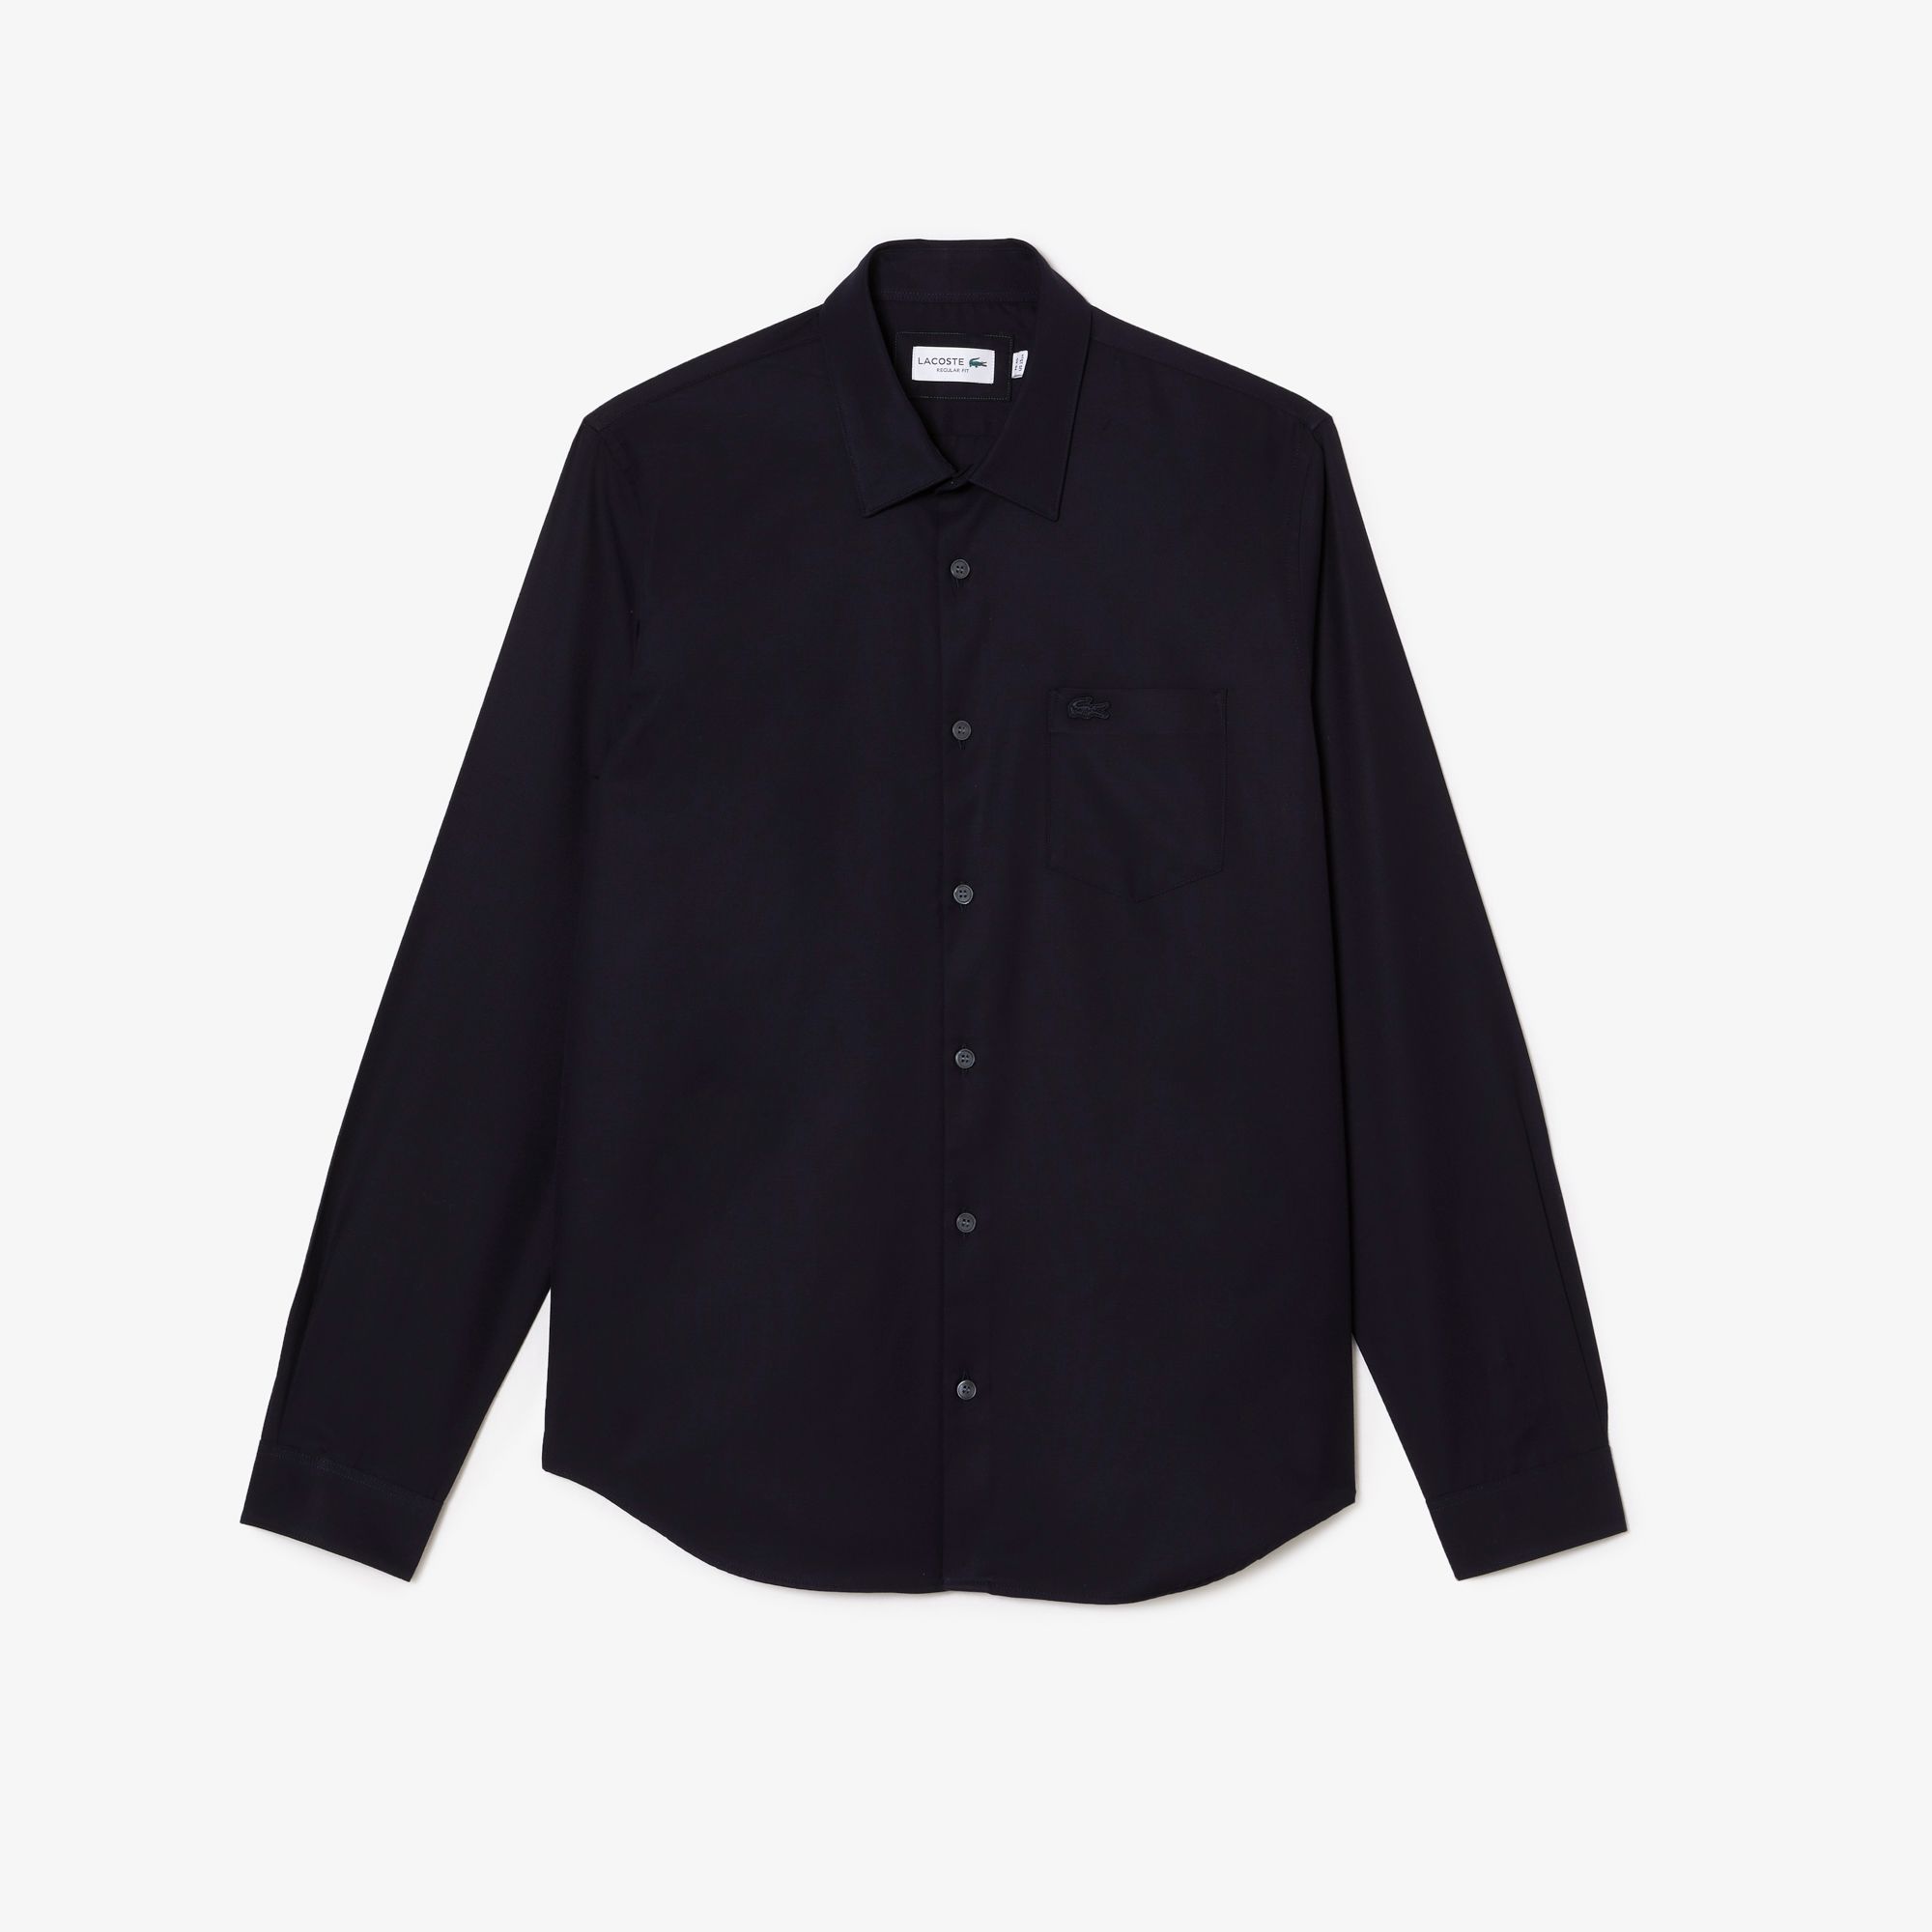  Lacoste Regular Fit Solid Cotton Shirt - Black 